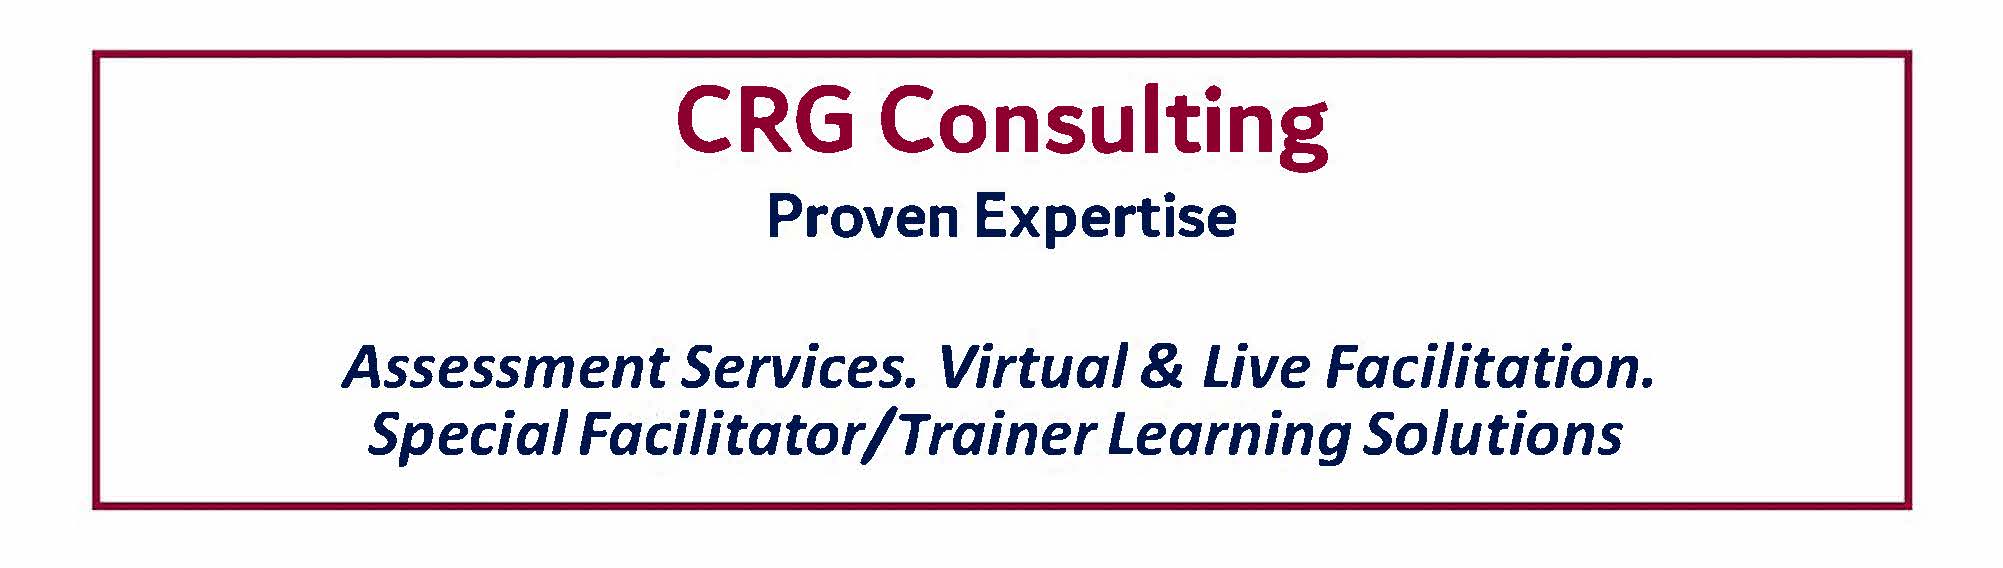 CRG Consulting logo